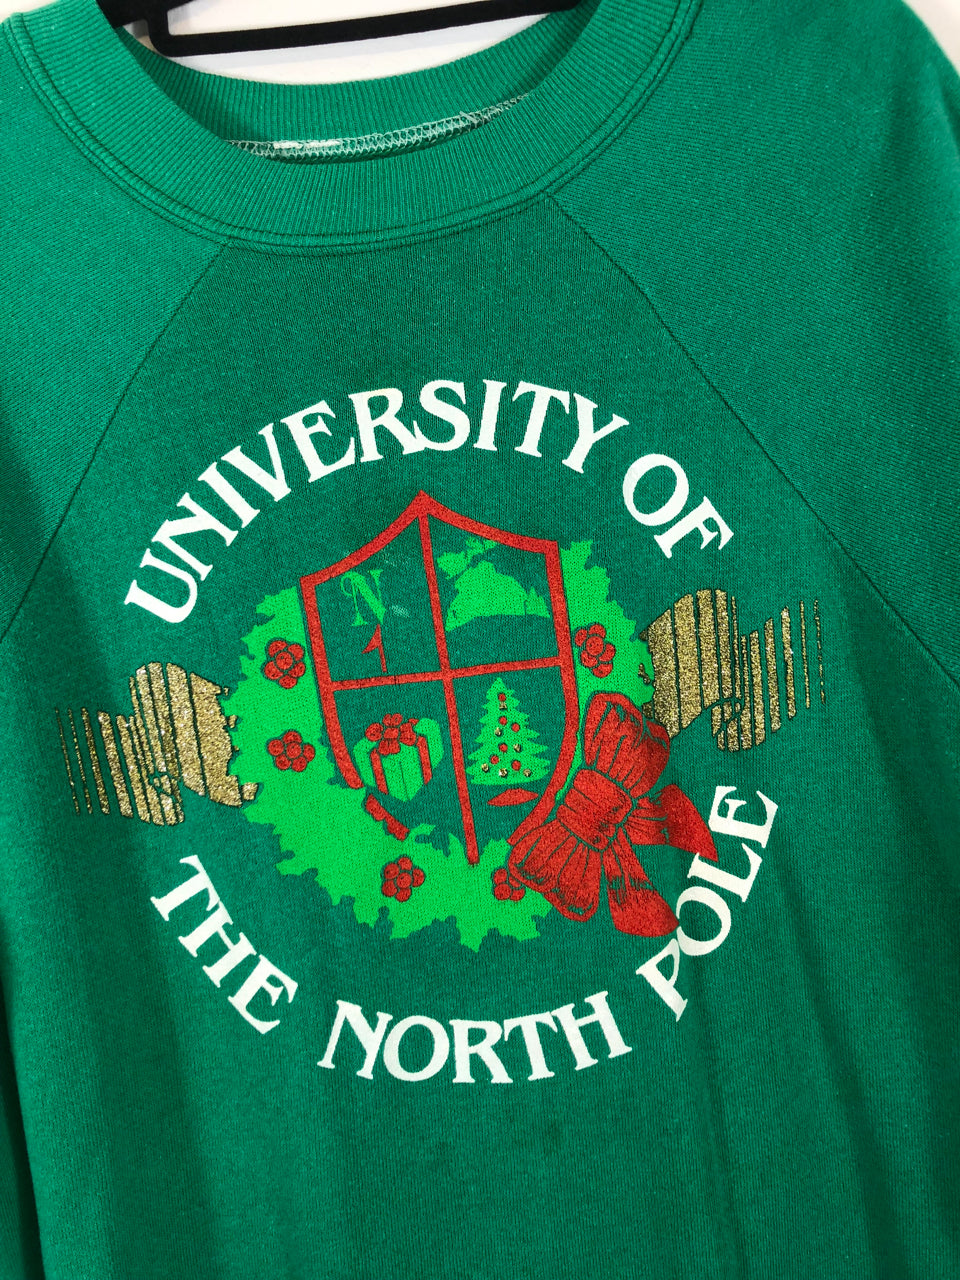 University of the North Pole Sweatshirt